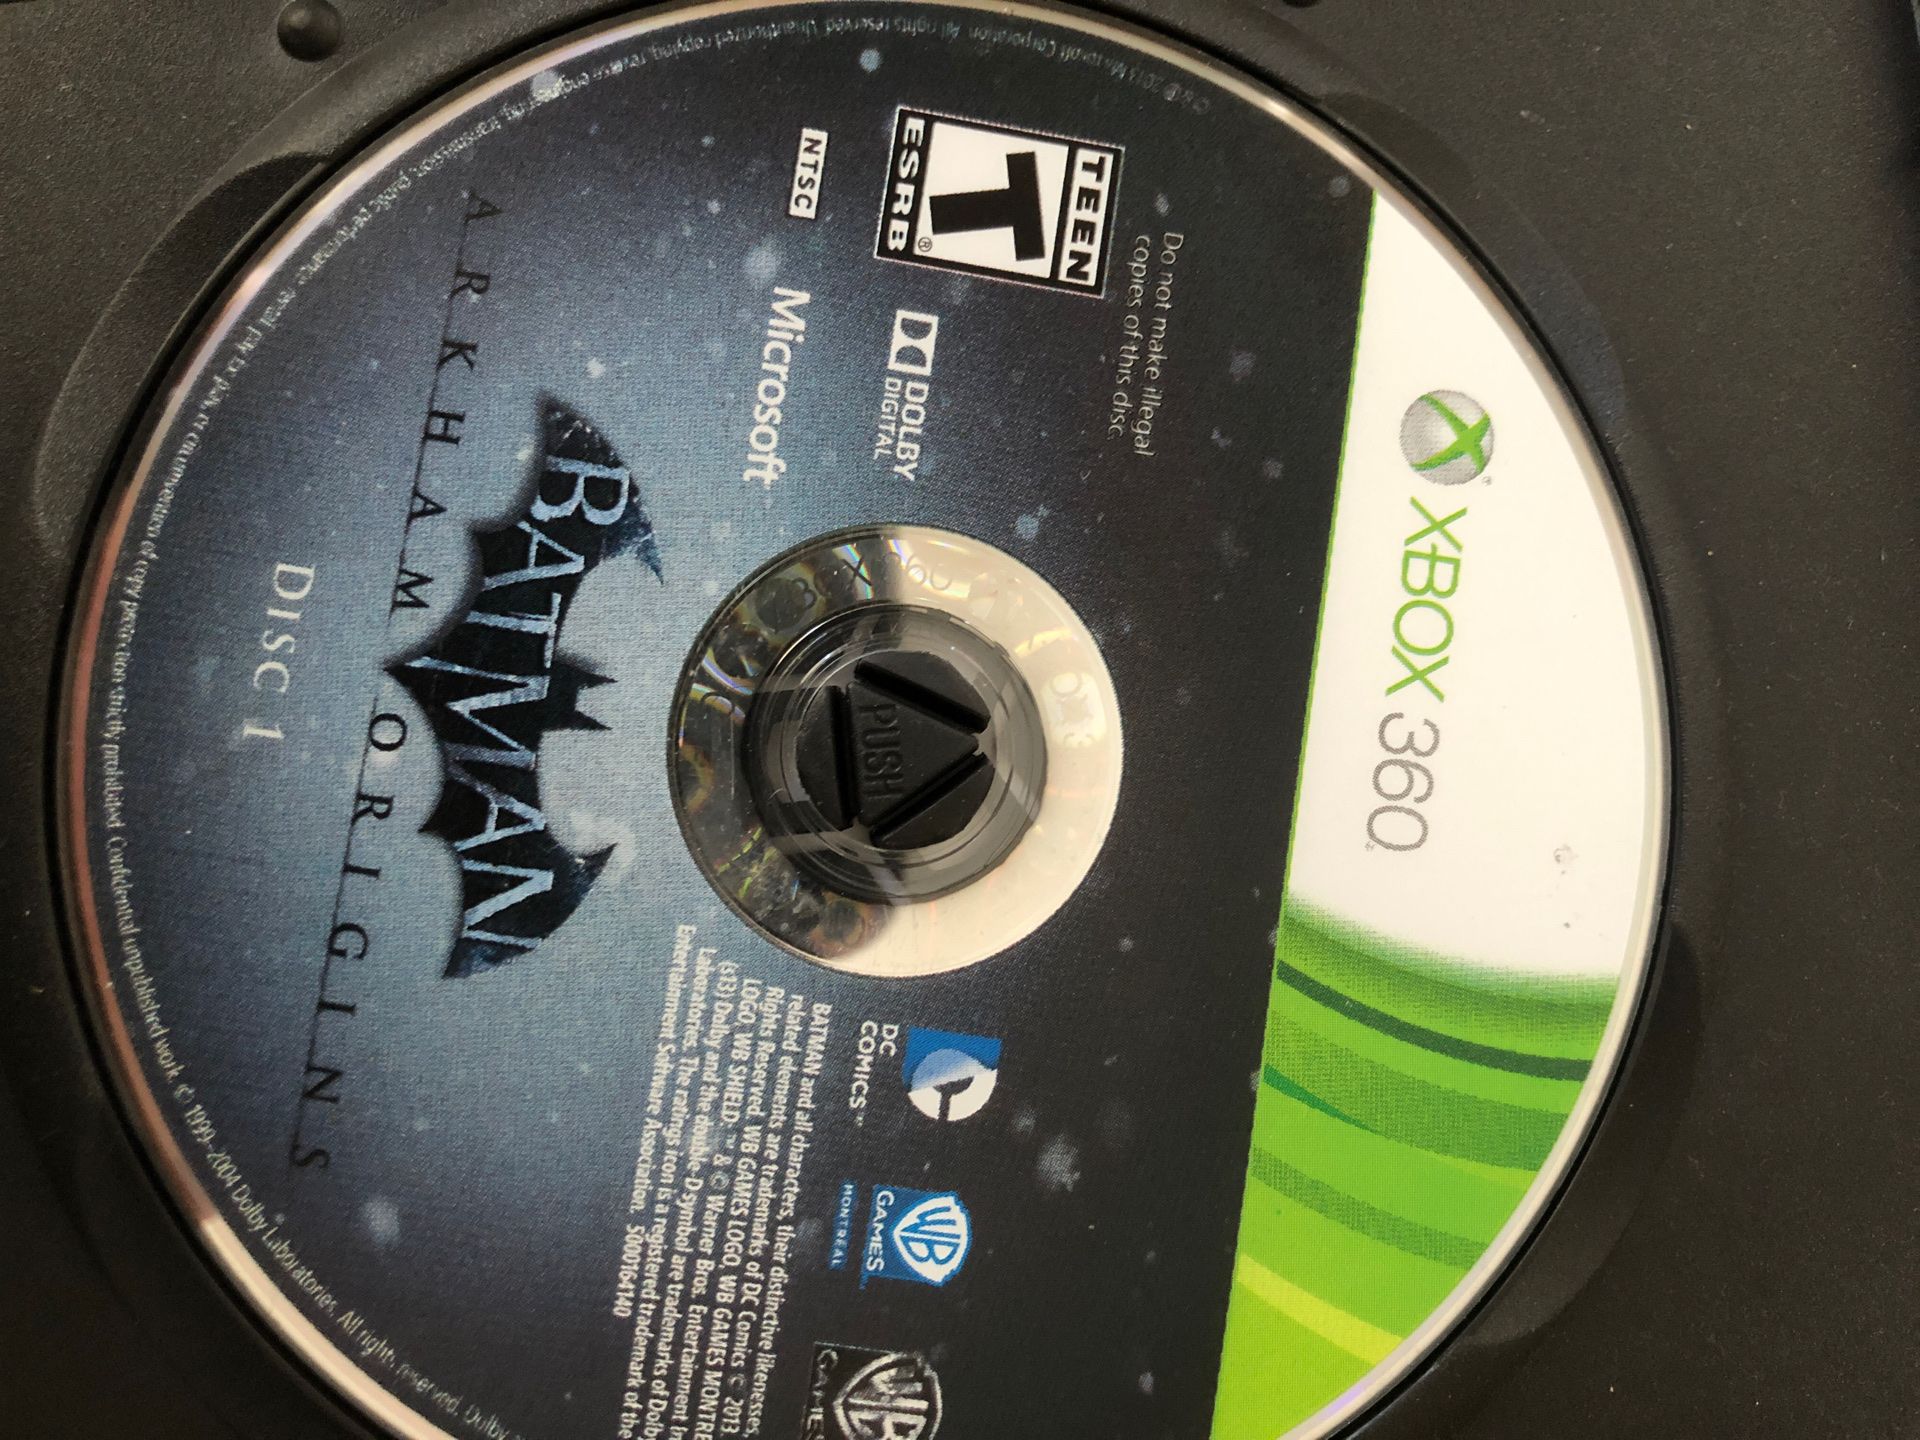 Batman: Arkham Origins (Xbox 360) Delisted on Xbox Store! Rare game!